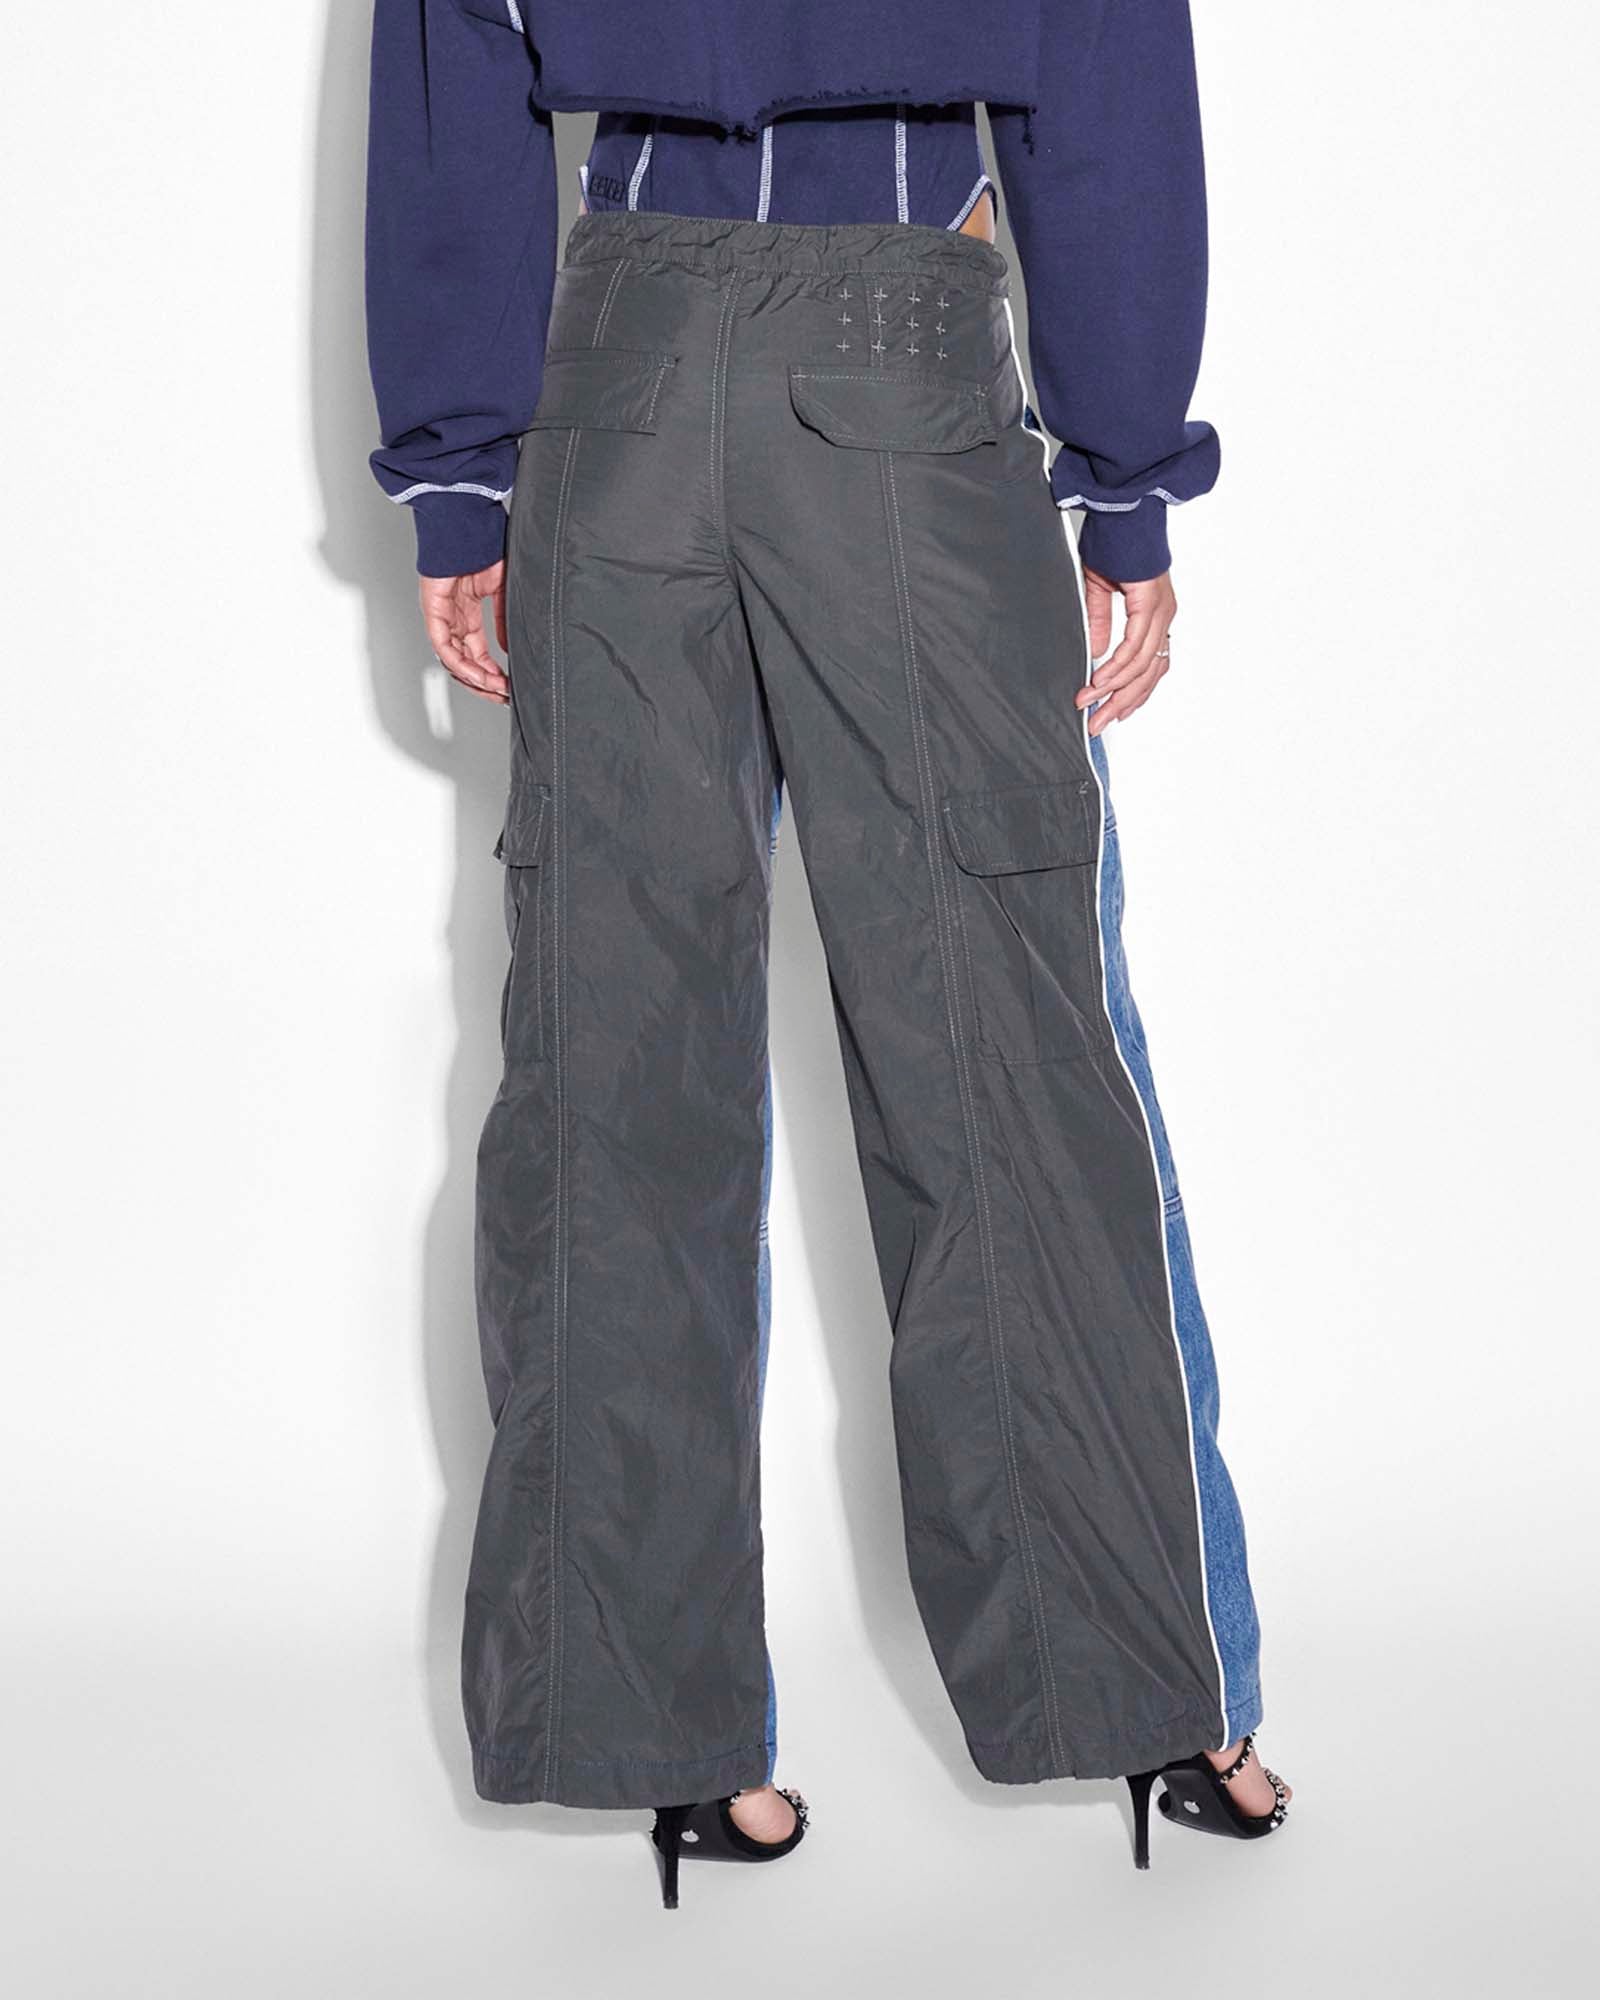 Jet Black Nylon Sweatpants Small Baggy Fit Track Pants Mesh Lined Cabelas